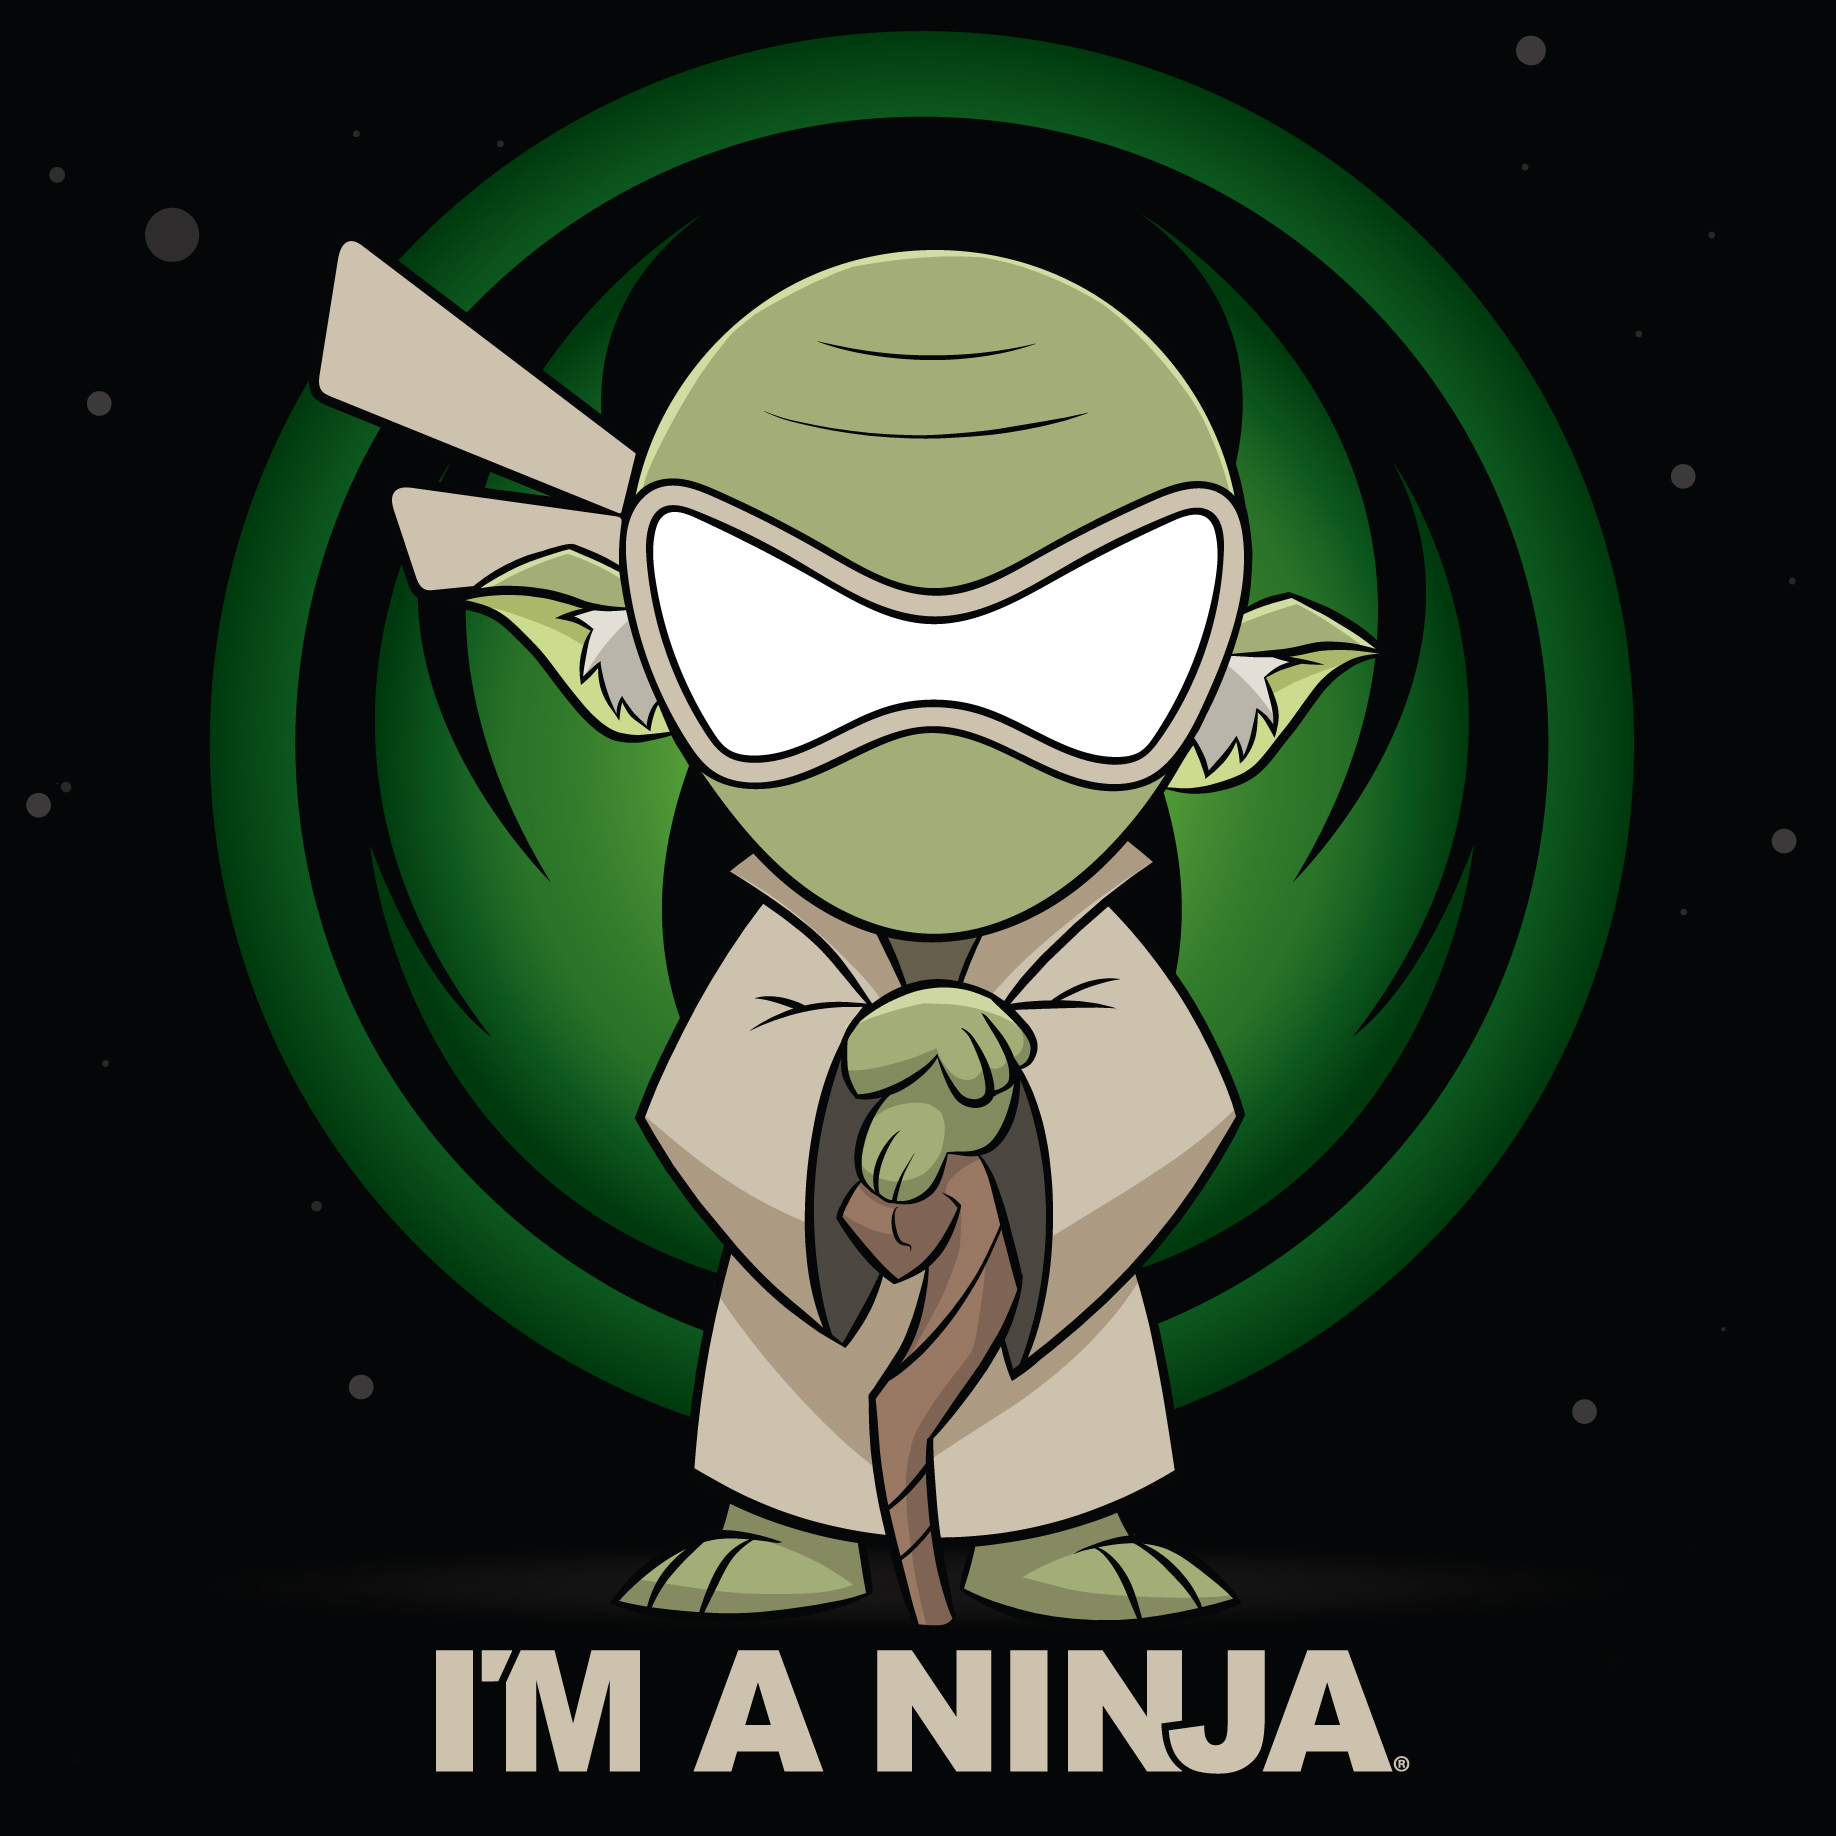 Yoda x I'M A NINJA